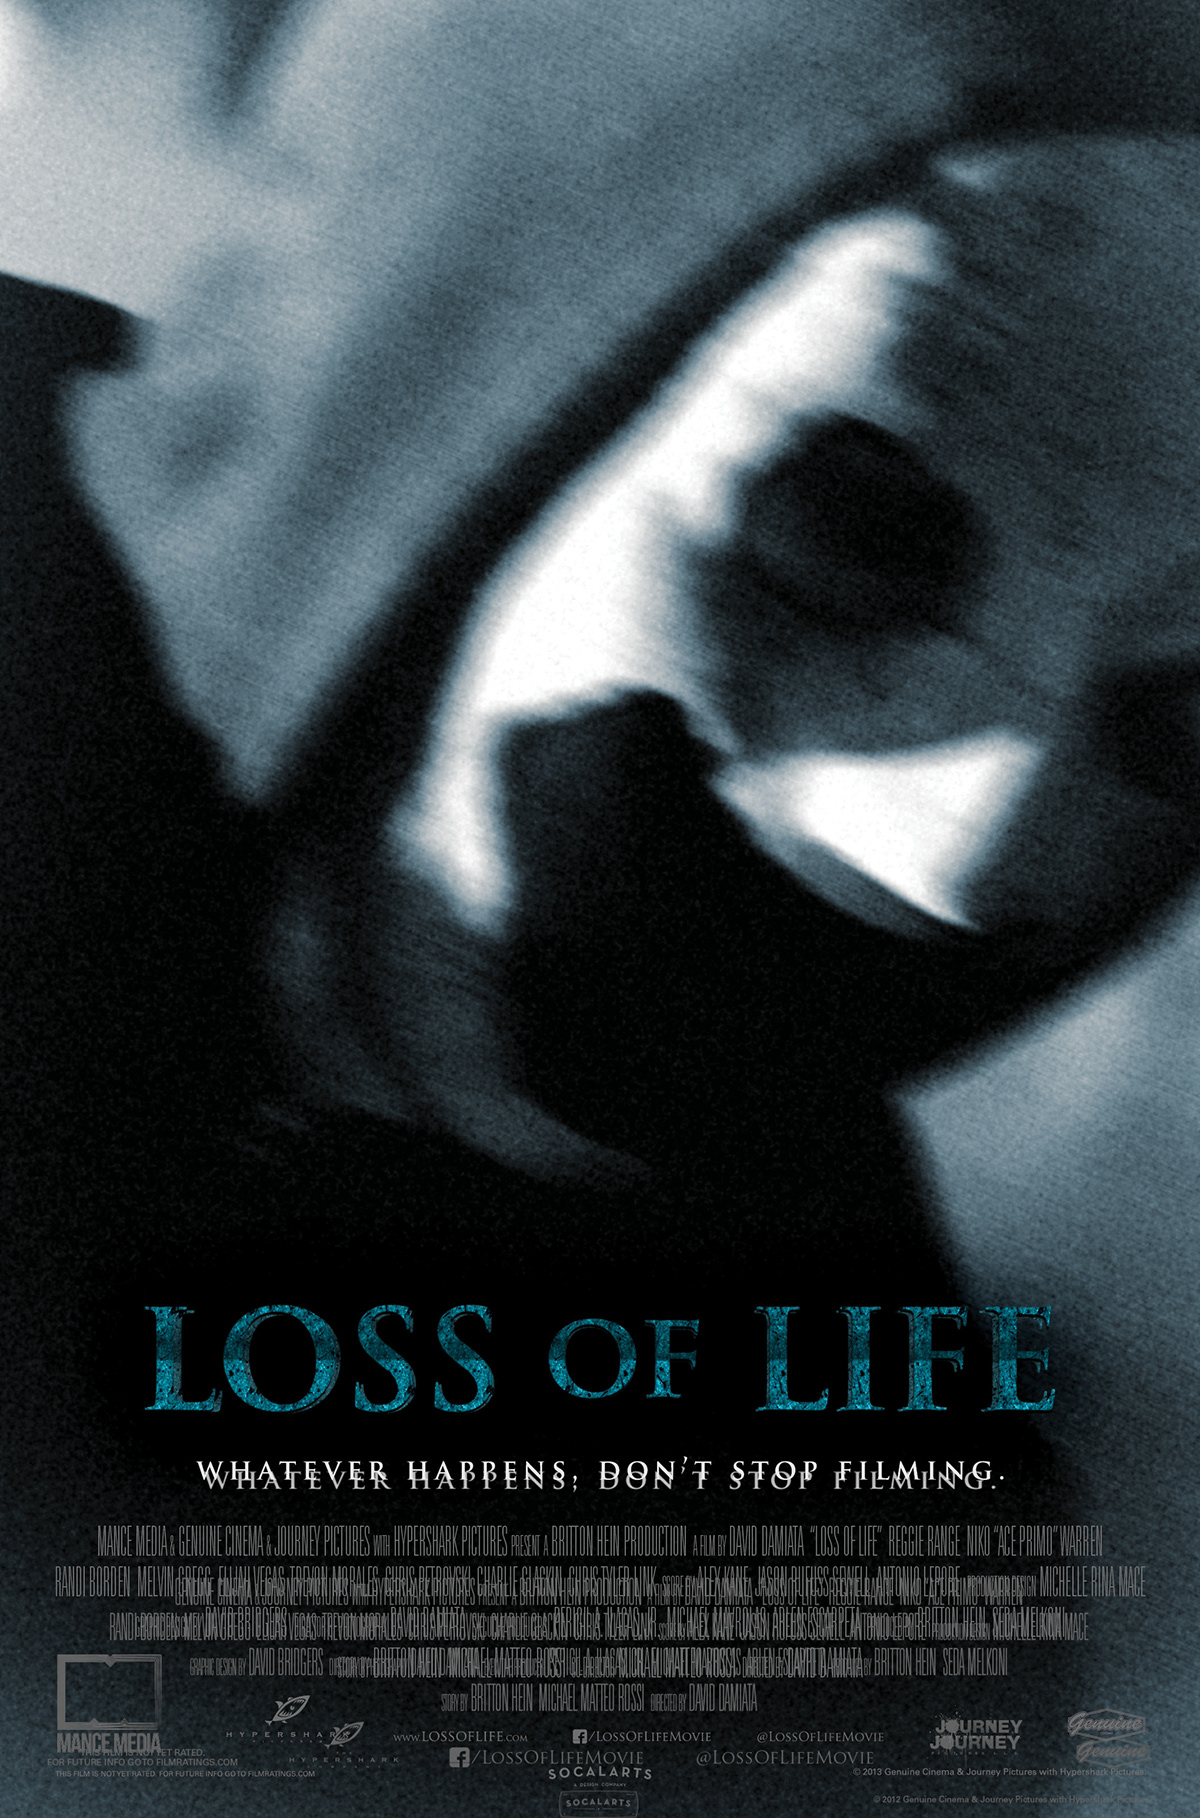 Loss of life poster Socalarts mance media britton hein journey pictures genuine cinema horror thriller killer hypershark pictures keyart